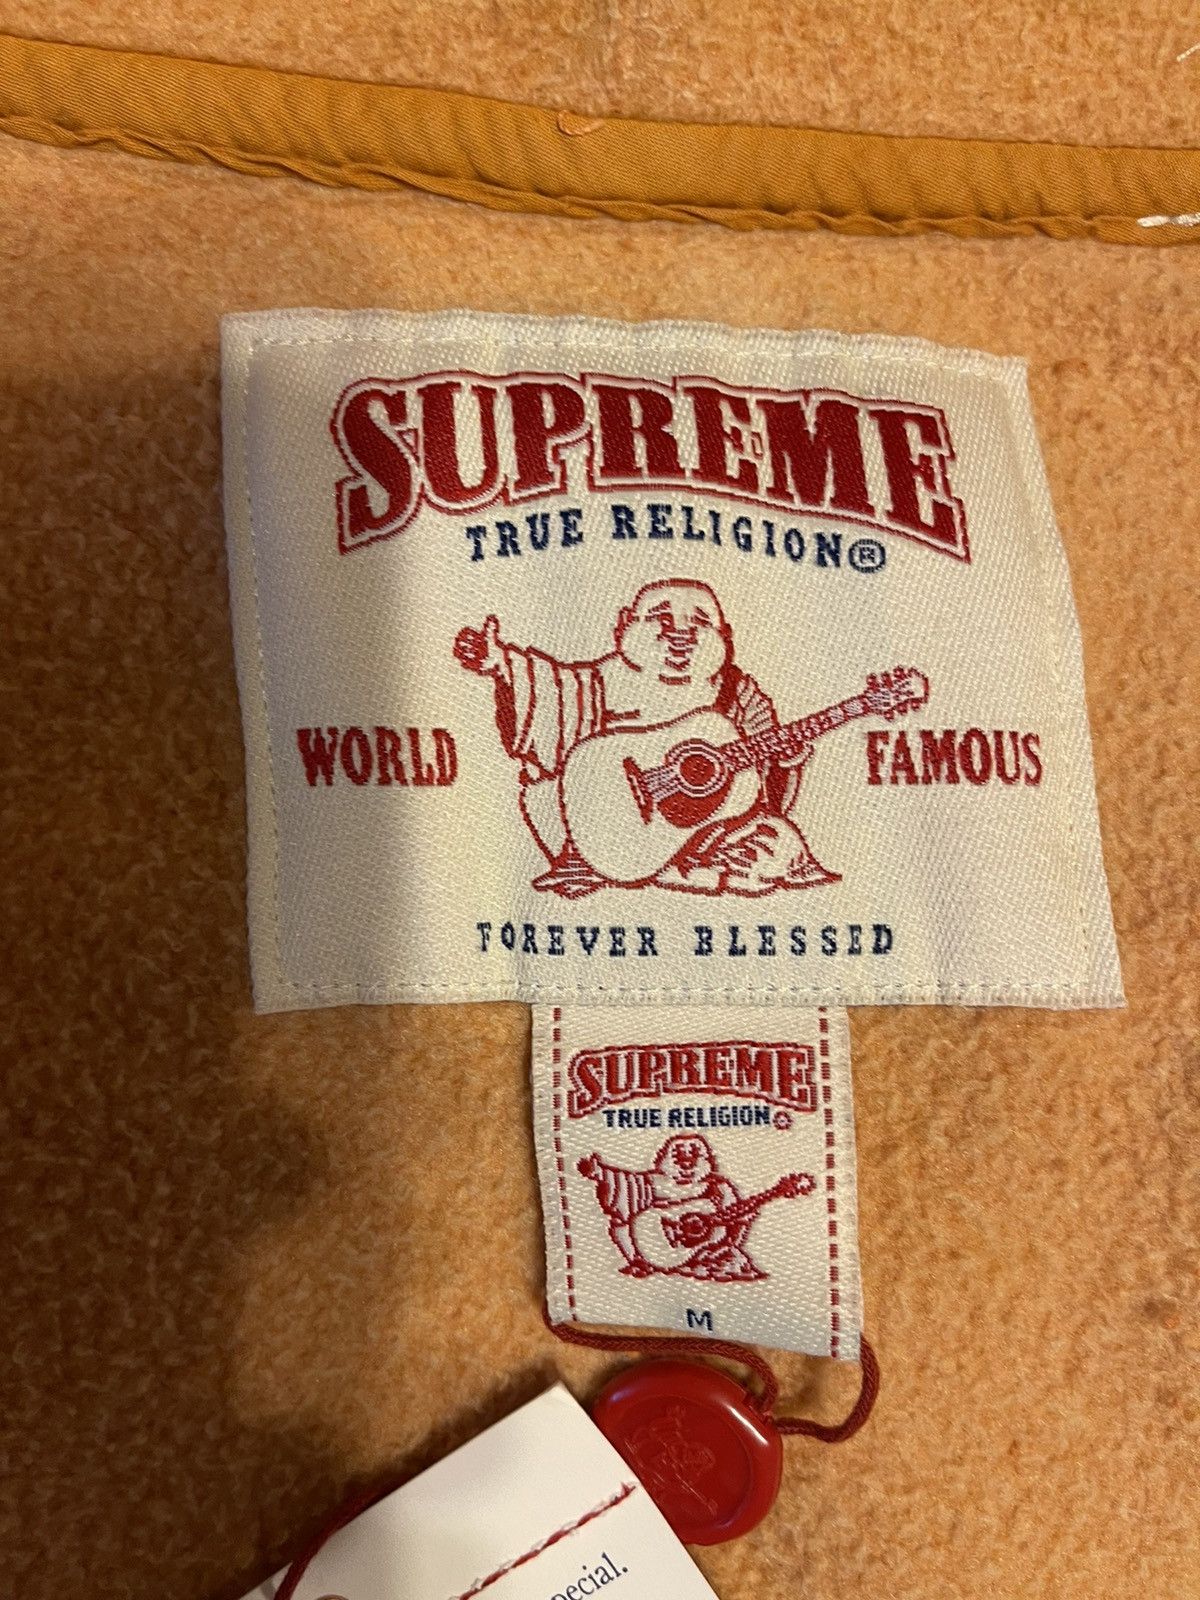 Supreme Supreme/True Religion Zip Up Hooded Sweatshirt Size US M / EU 48-50 / 2 - 5 Thumbnail